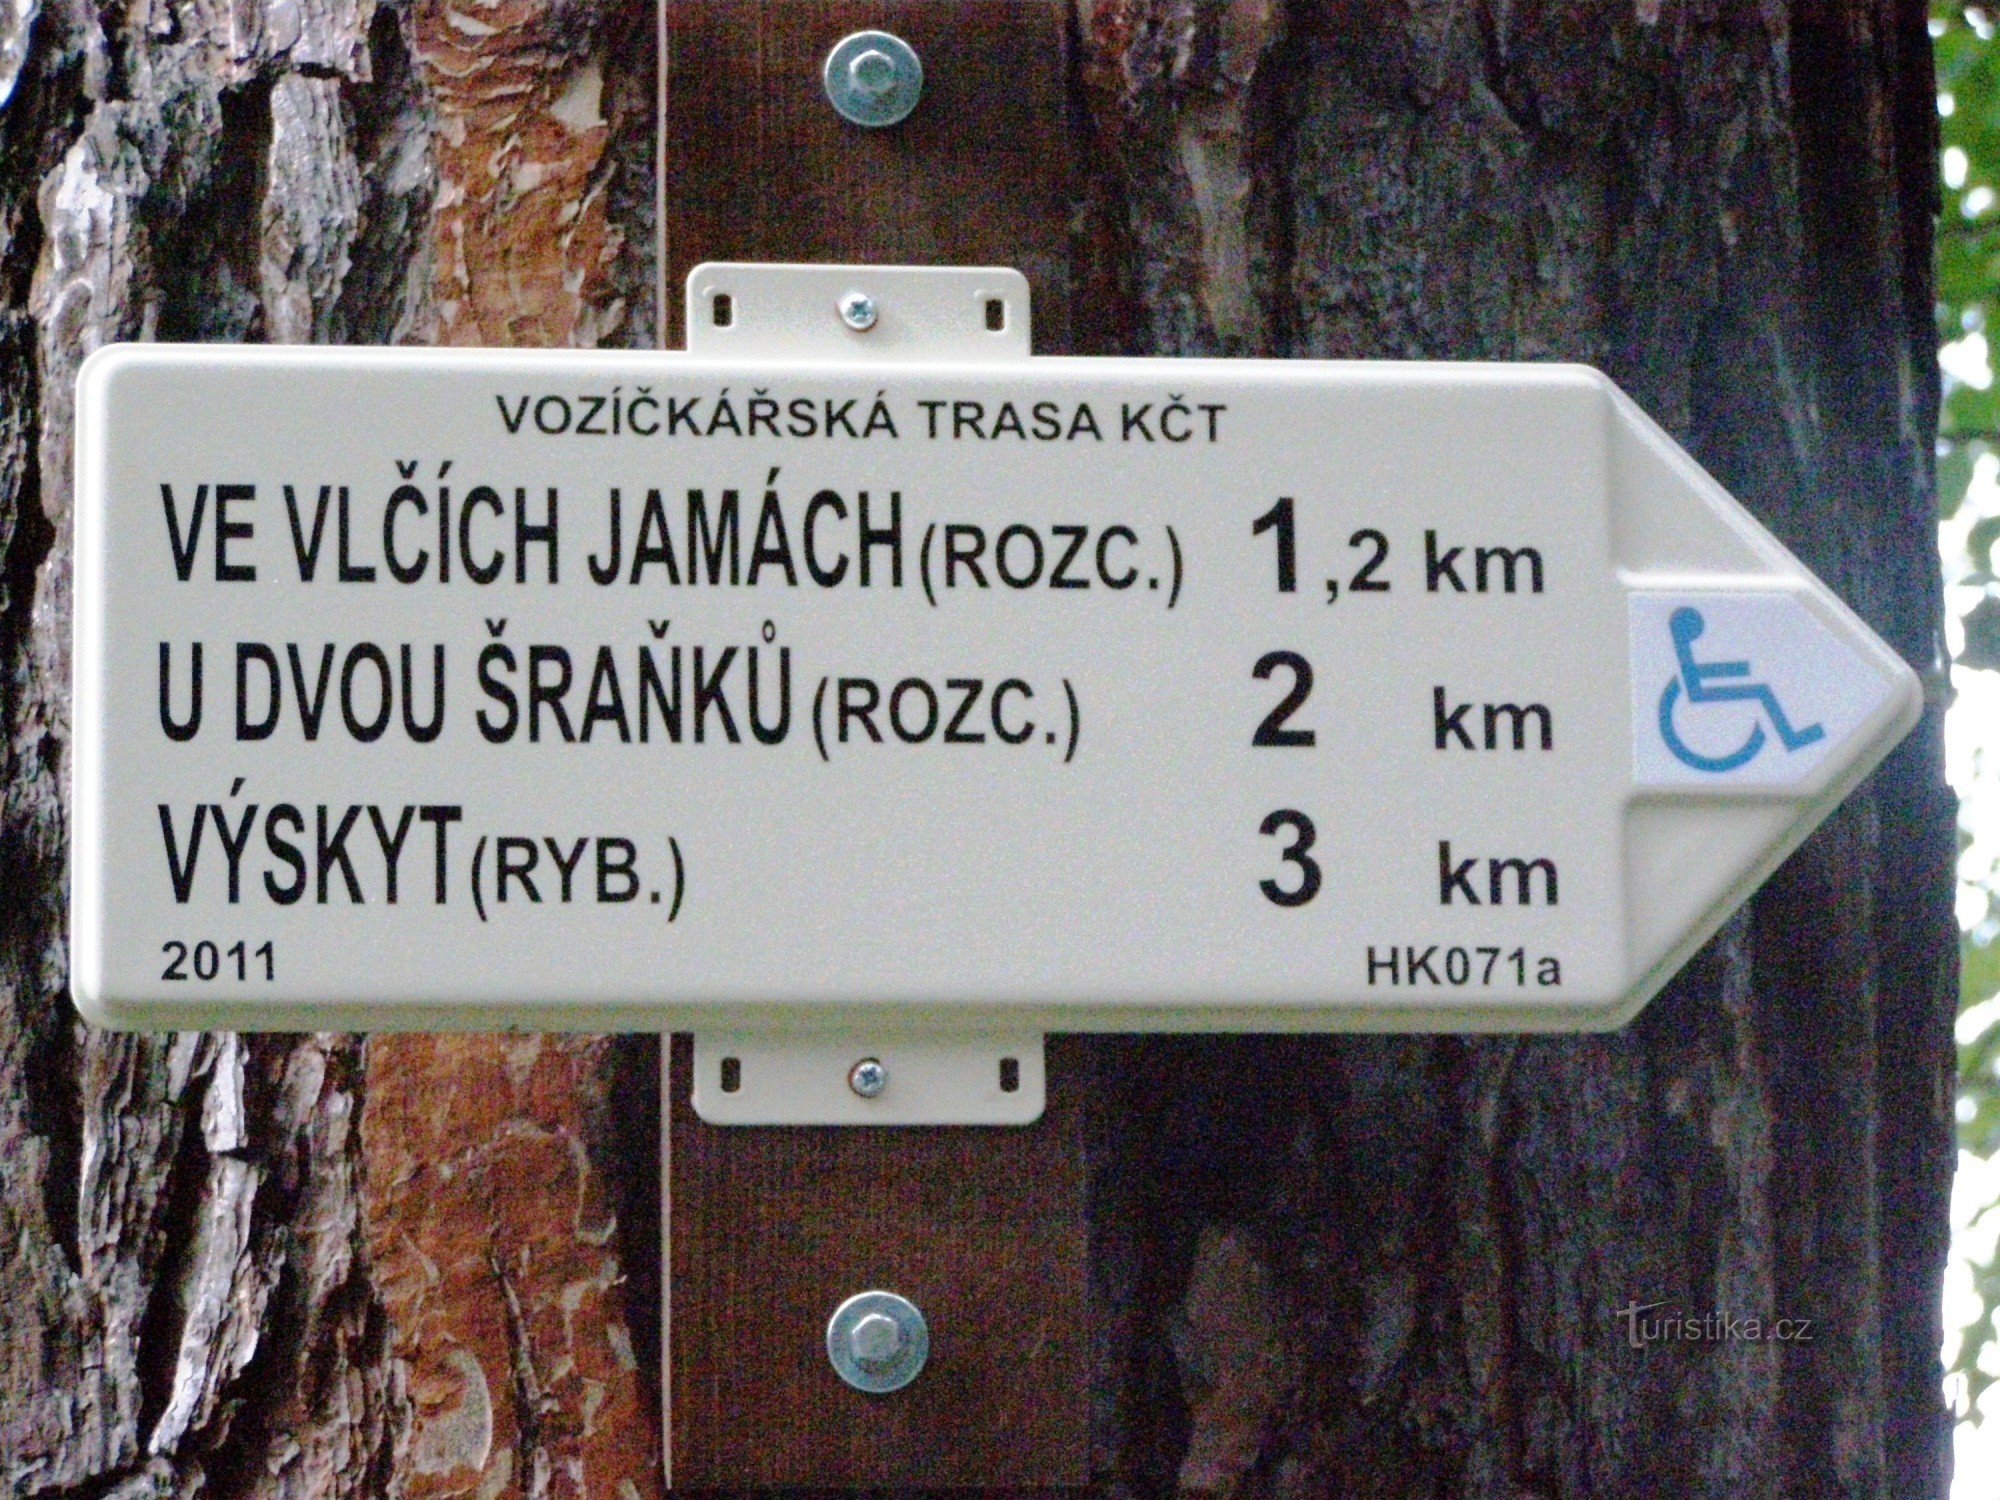 Rollstuhlwege in den Wäldern von Hradec Králové